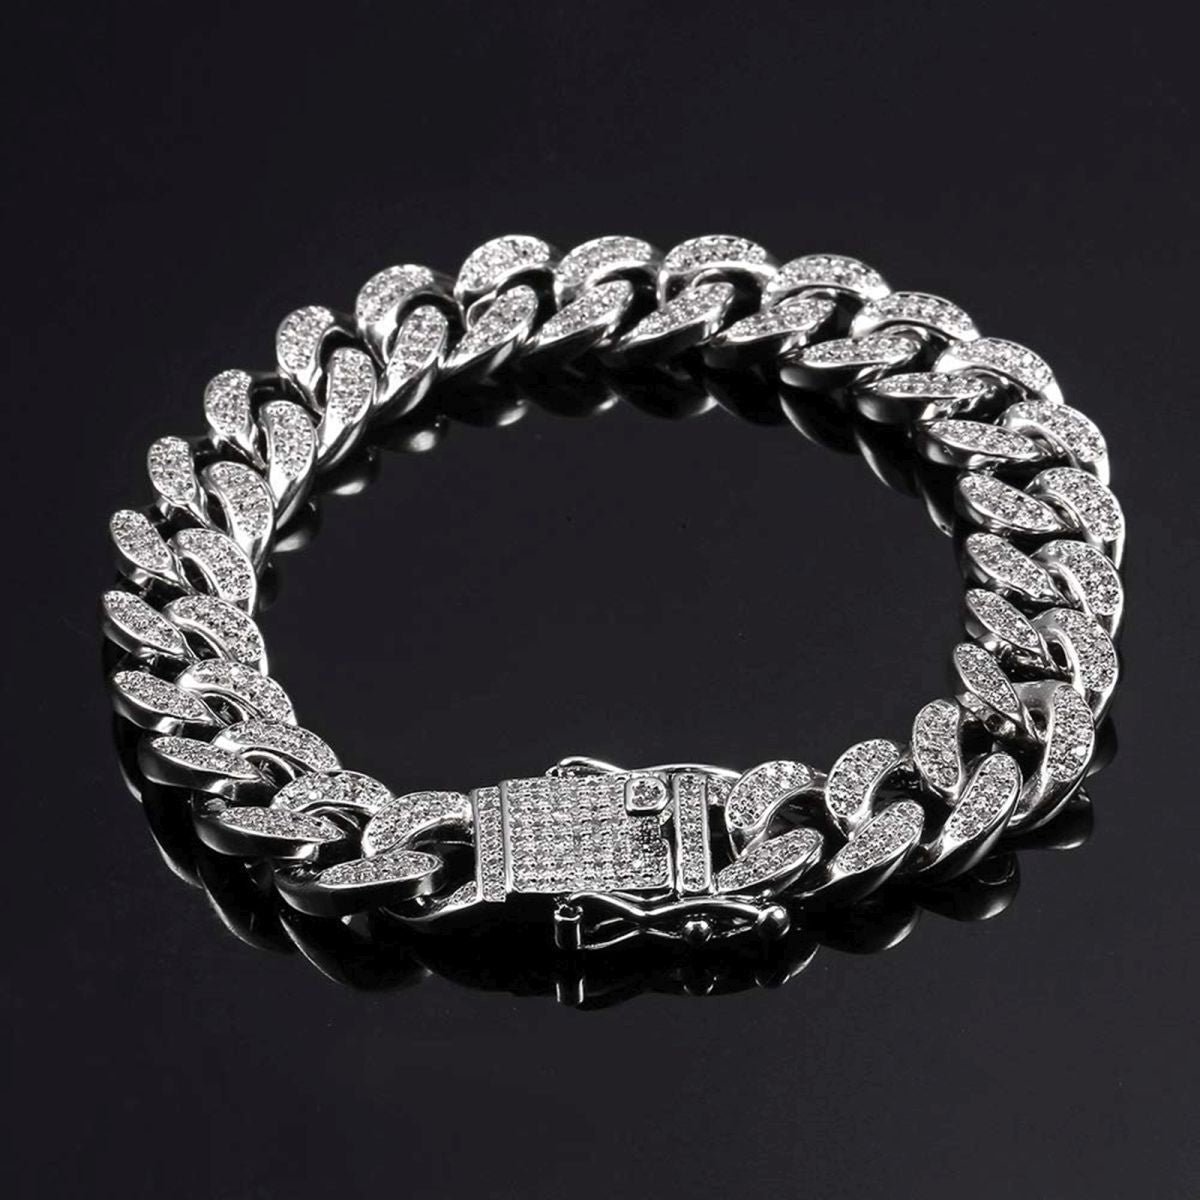 Lightweight charm style bracelet - silver, gold, gunmetal – Renee